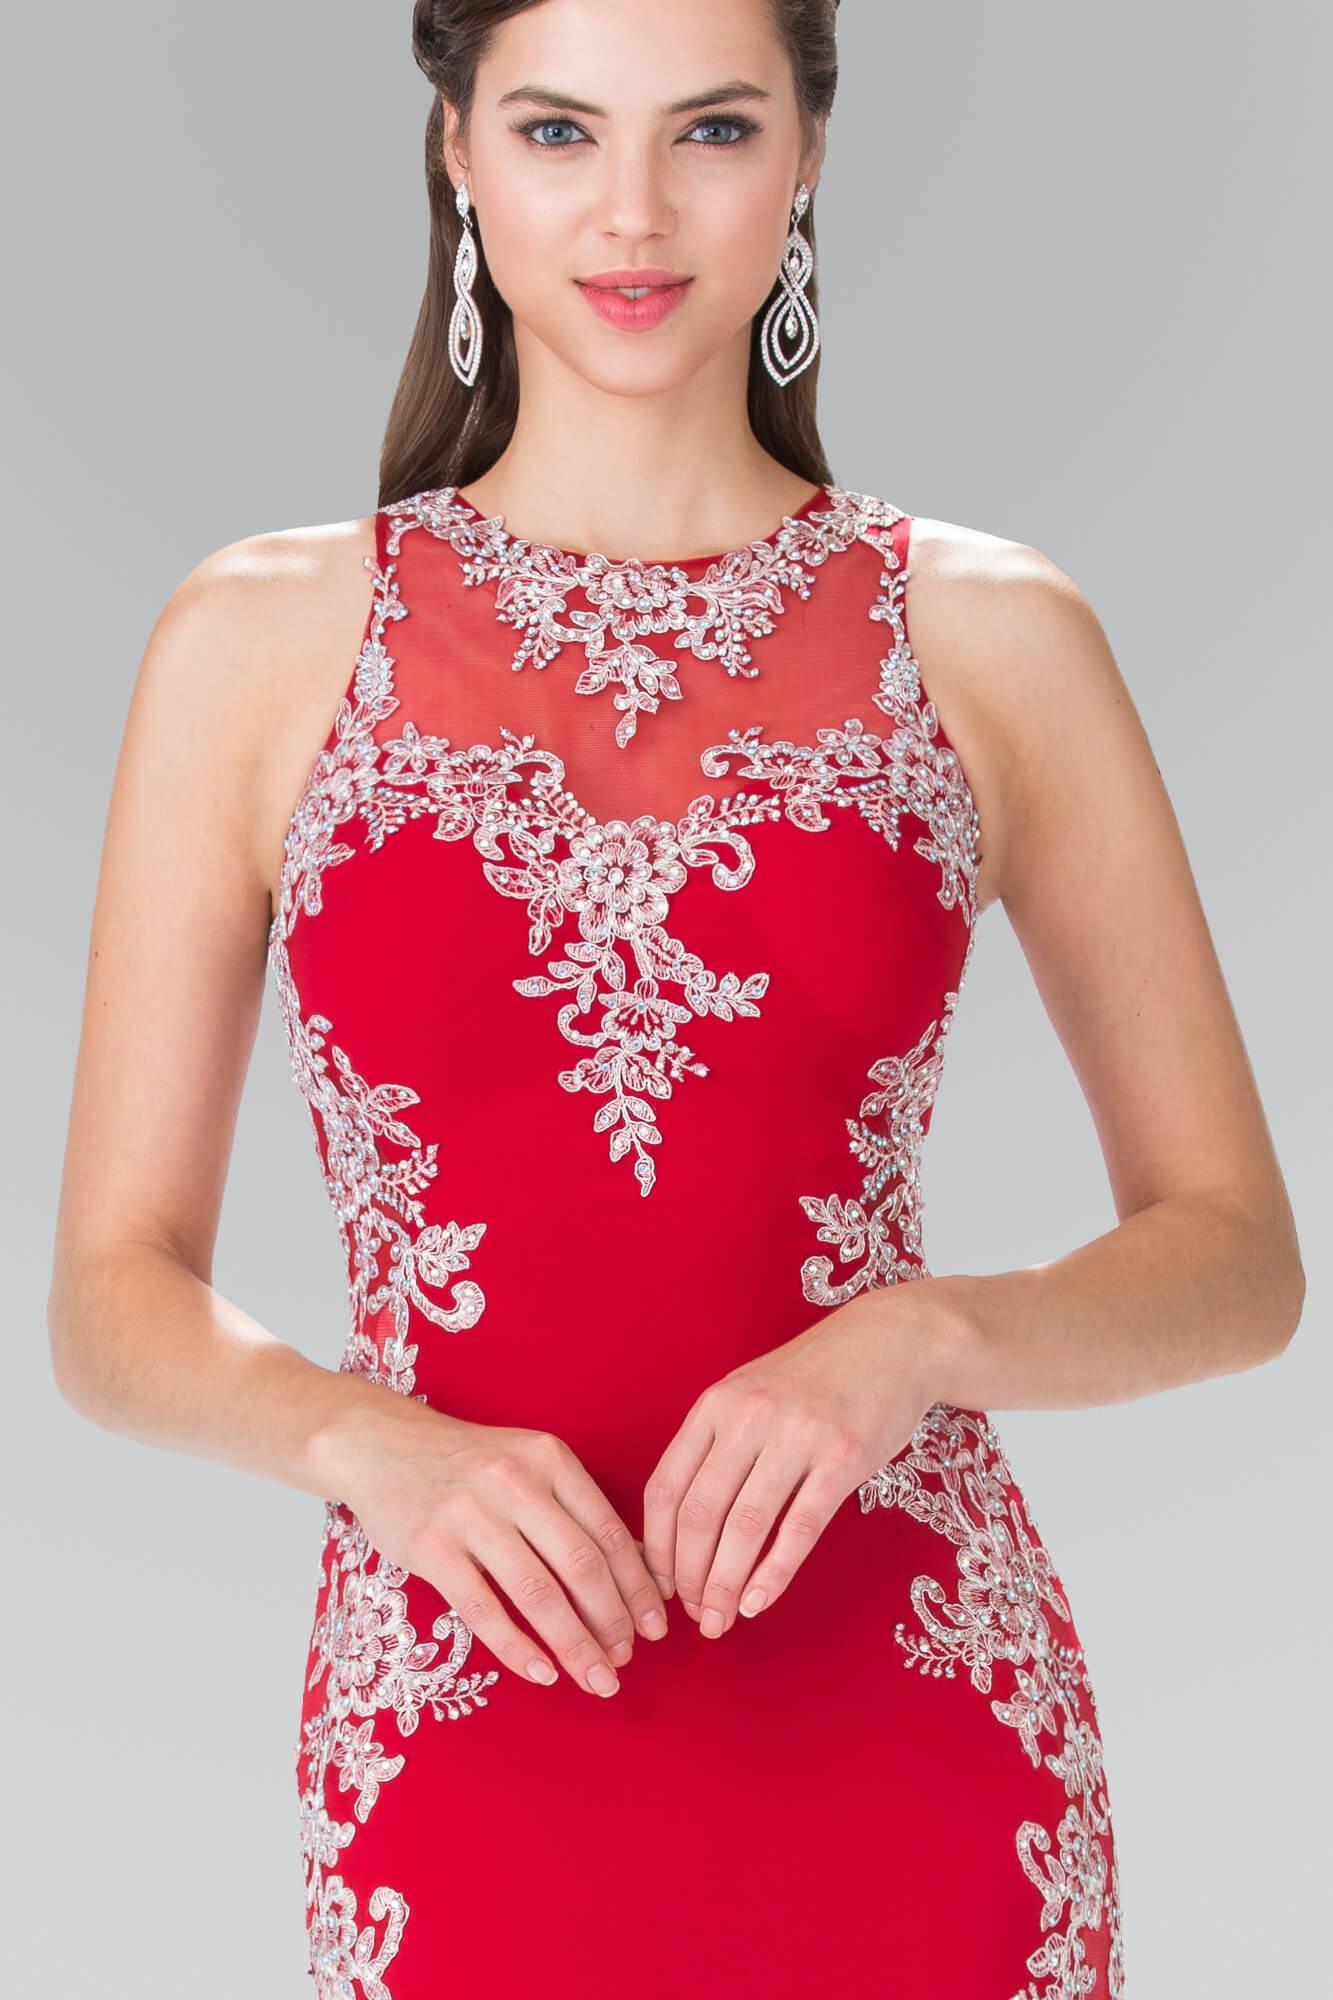 Long Formal Beaded Prom Dress Evening Gown - The Dress Outlet Elizabeth K